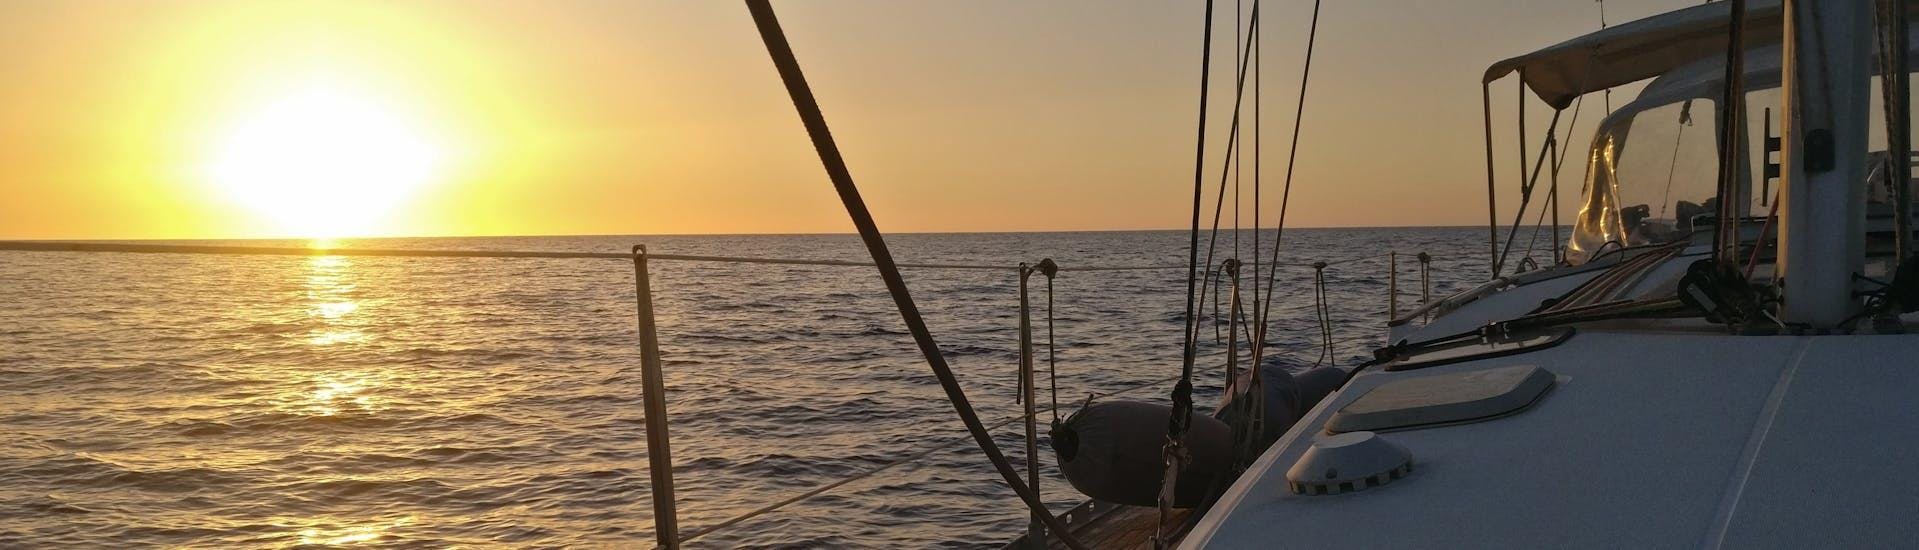 Fishing trip at sunset from quarantesimo parallelo Leuca fishing & chartering.